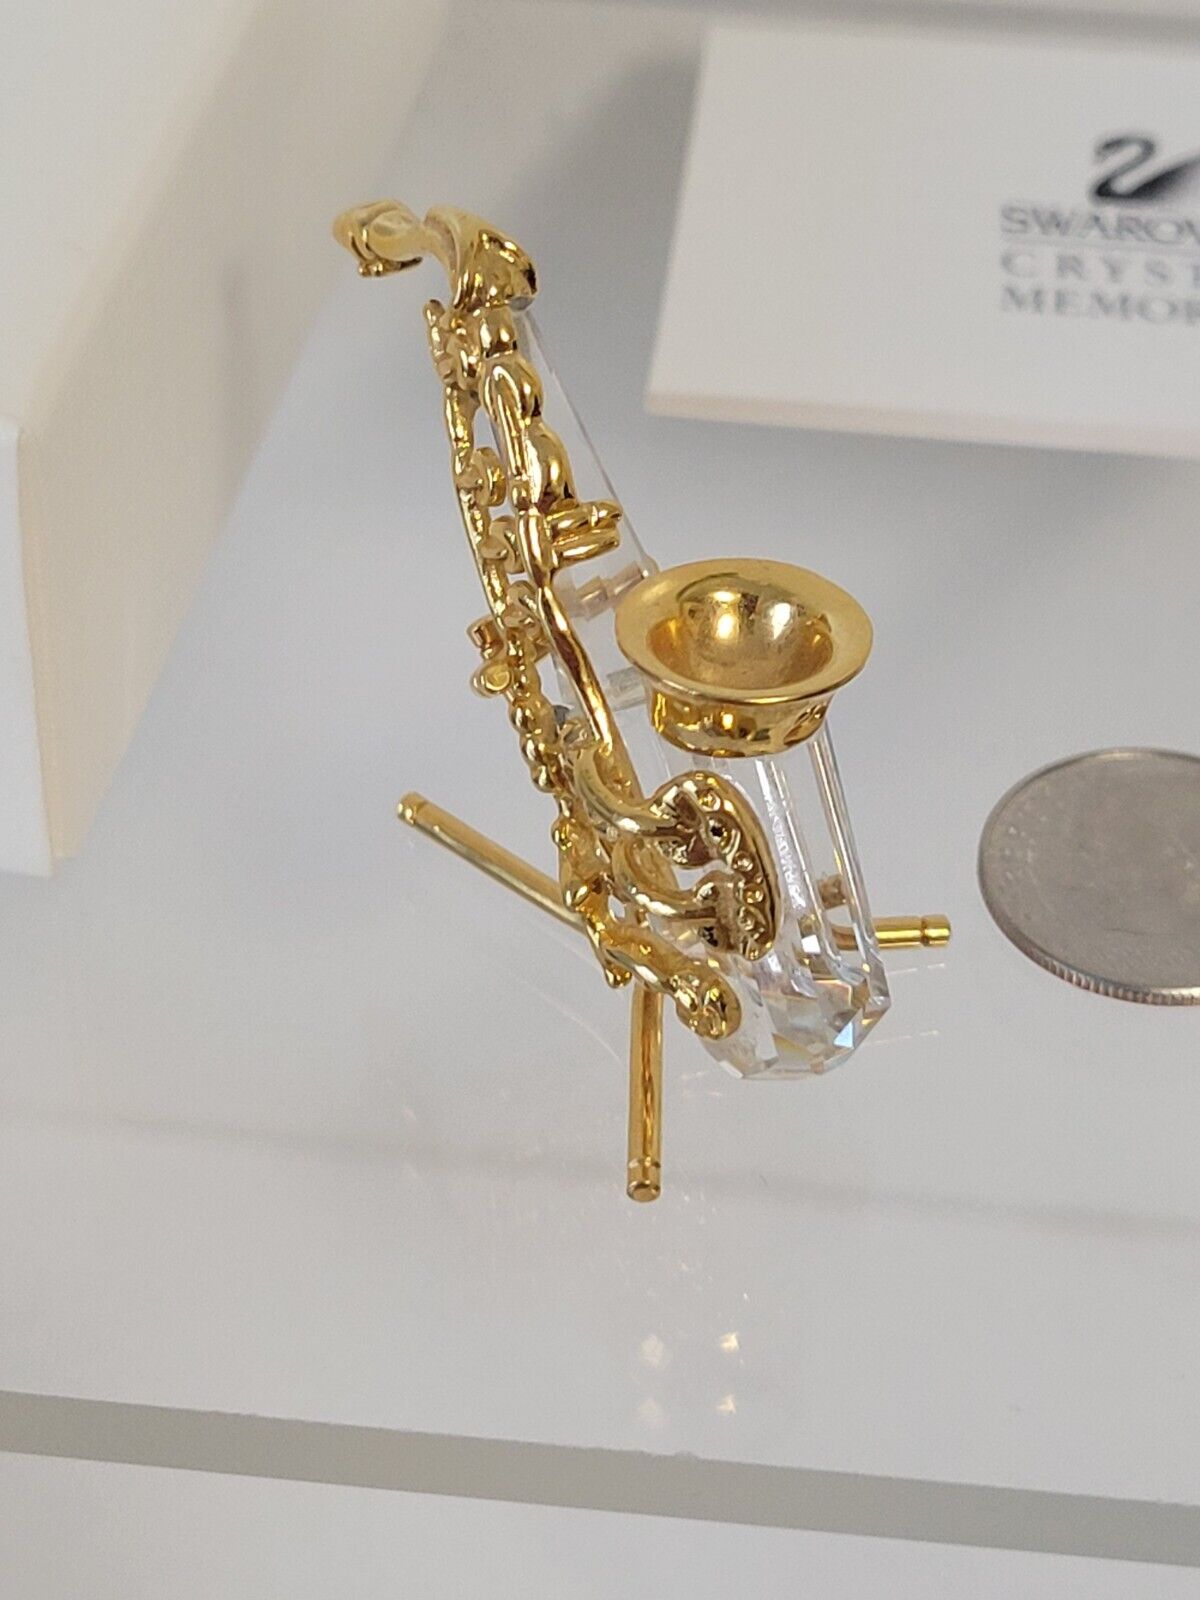 Swarovski Crystal Memories Gold Miniature Saxophone & Stand w/Box & Papers